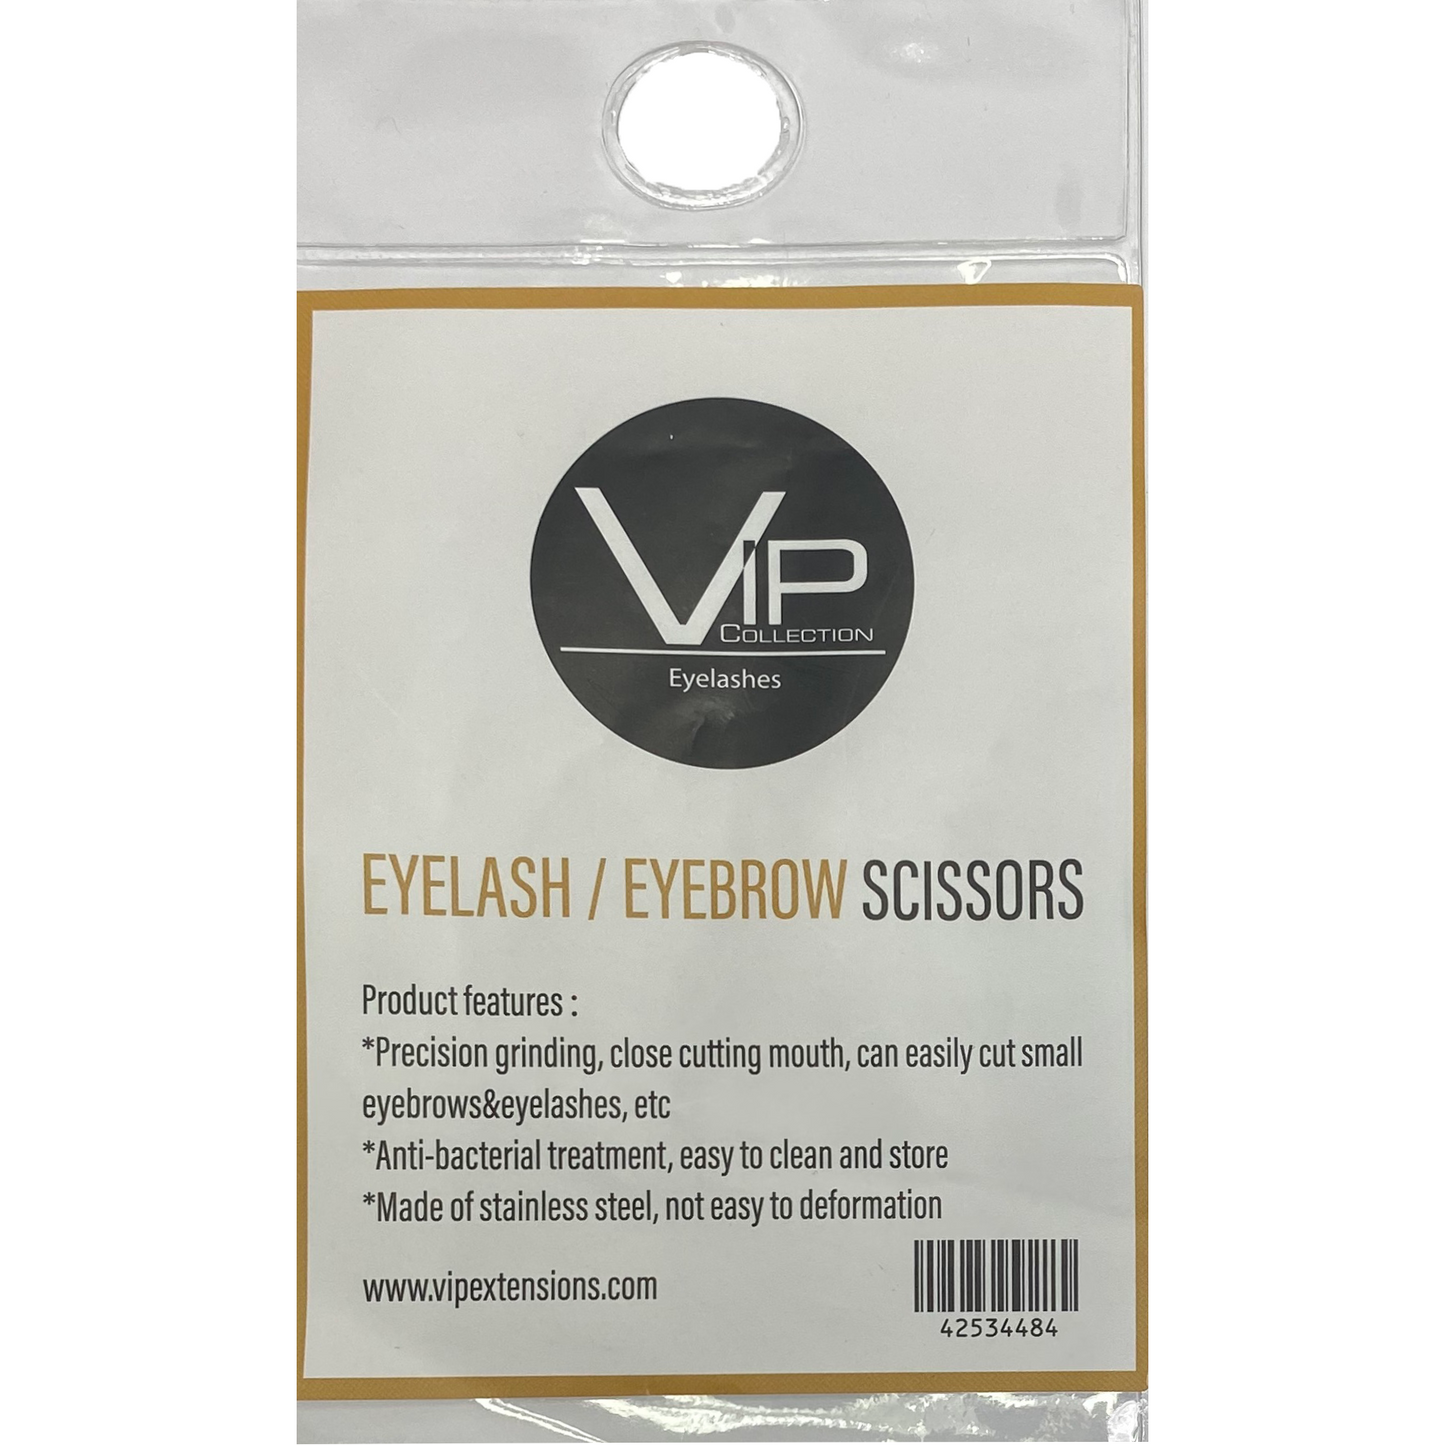 VIP Eyelash Scissors